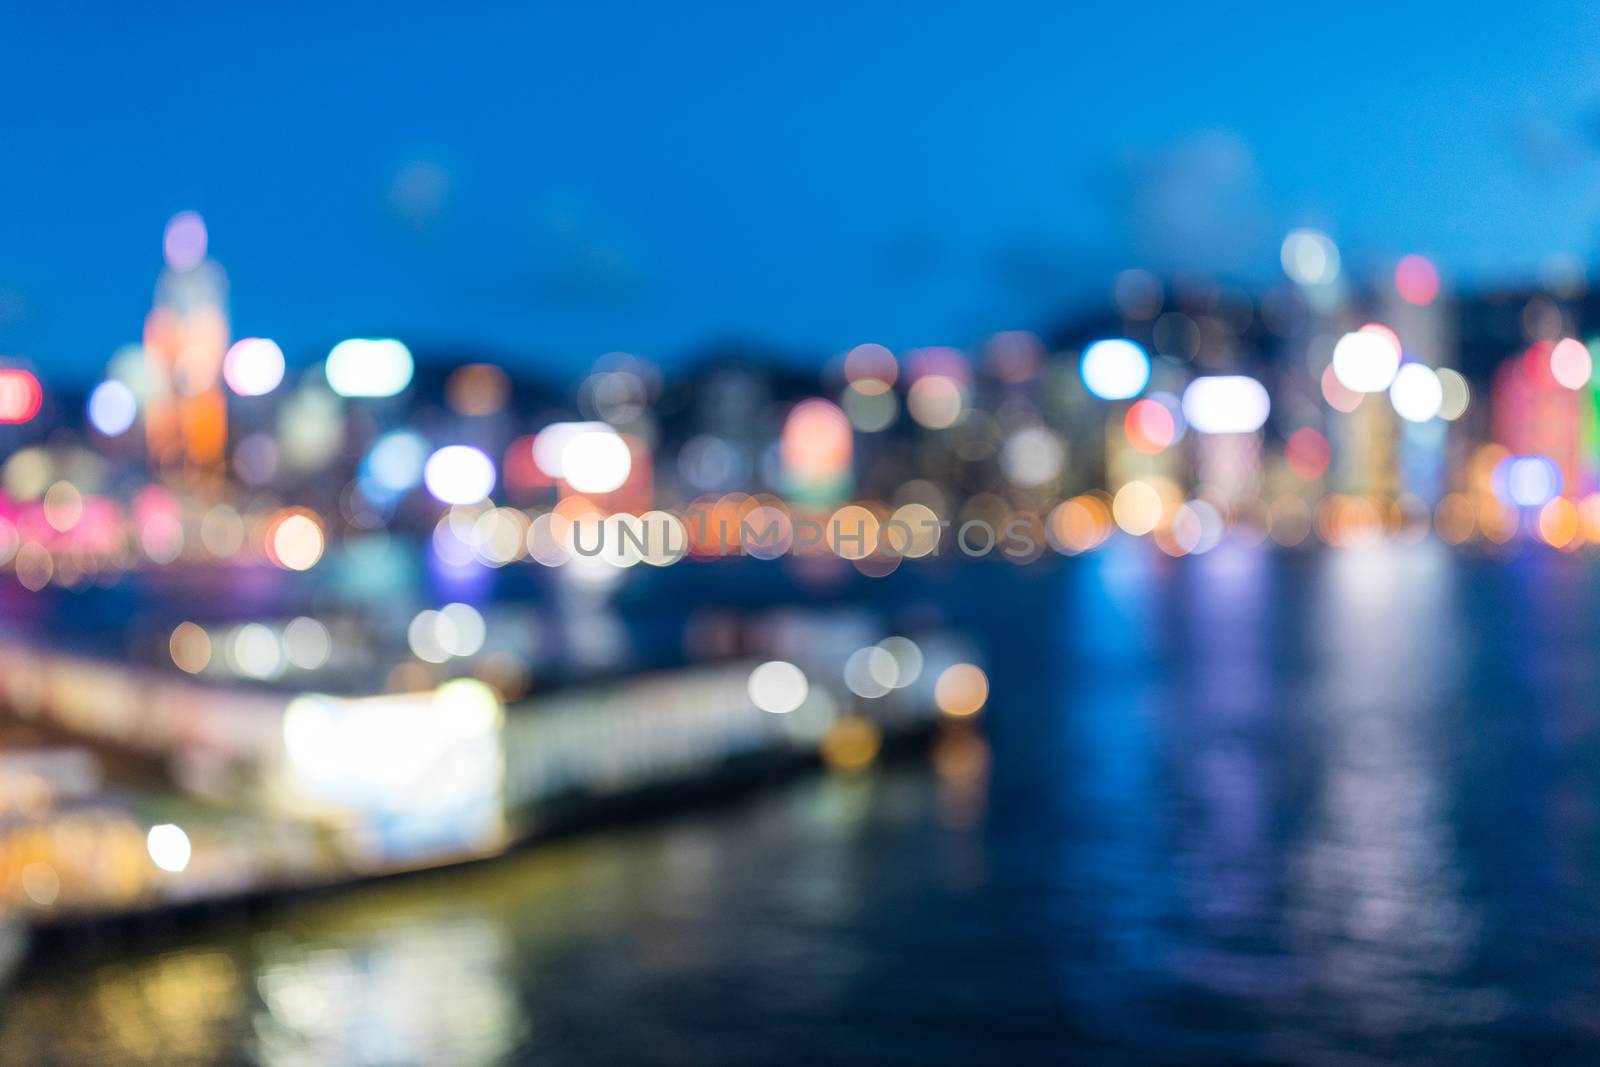 Blur view of Hong Kong by leungchopan